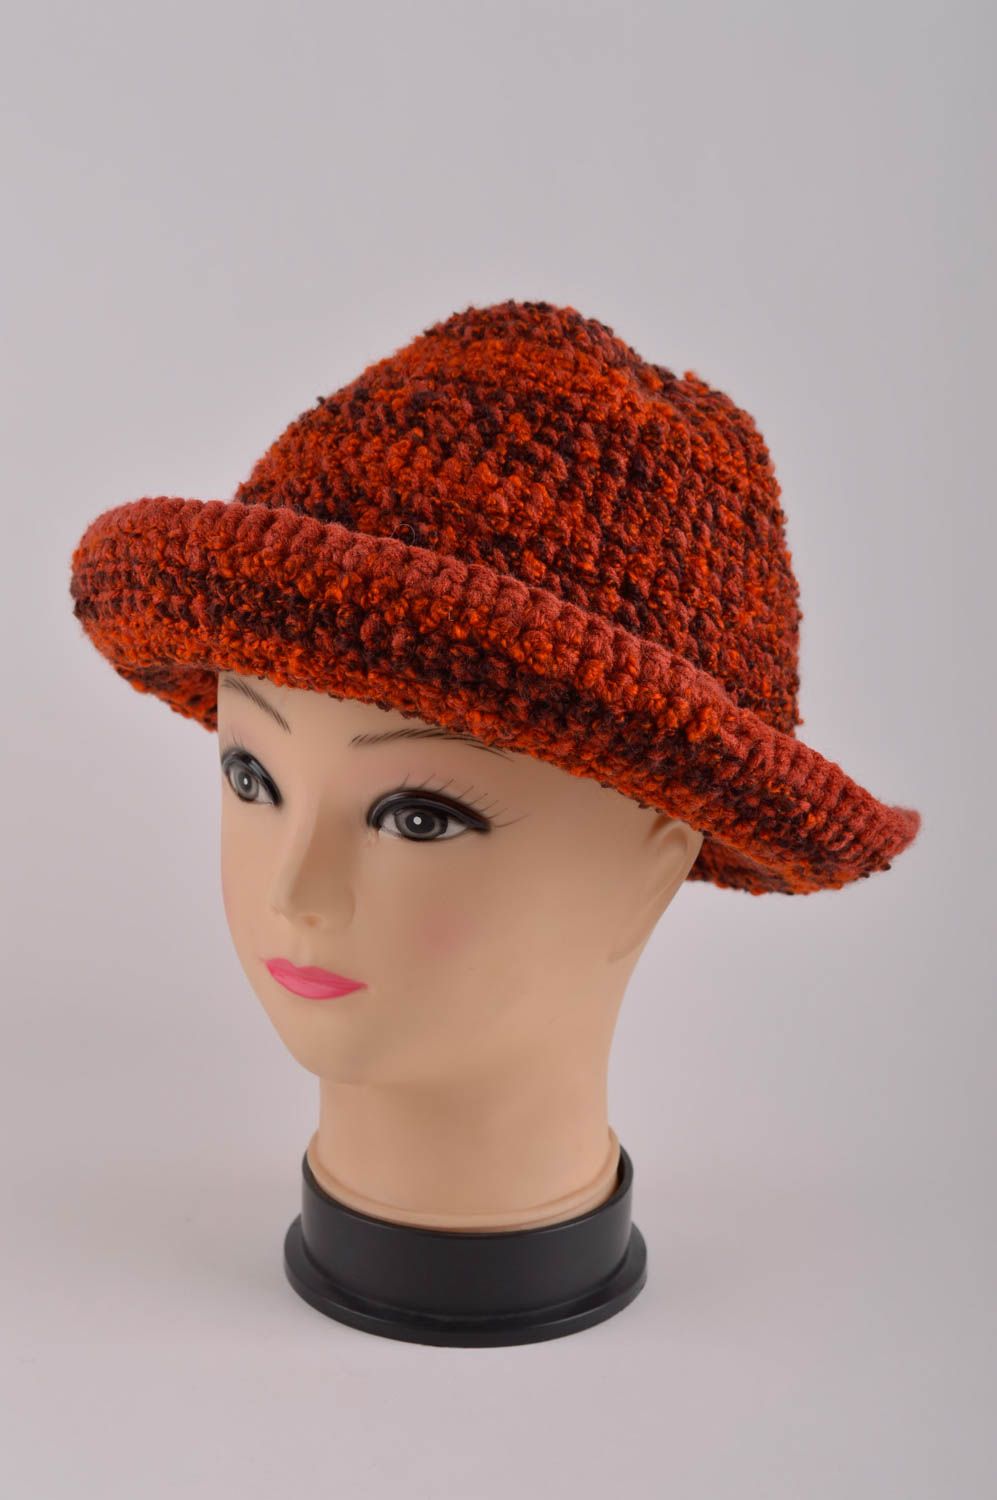 Handmade crochet hat womens hat accessories for women designer hats gift ideas photo 2